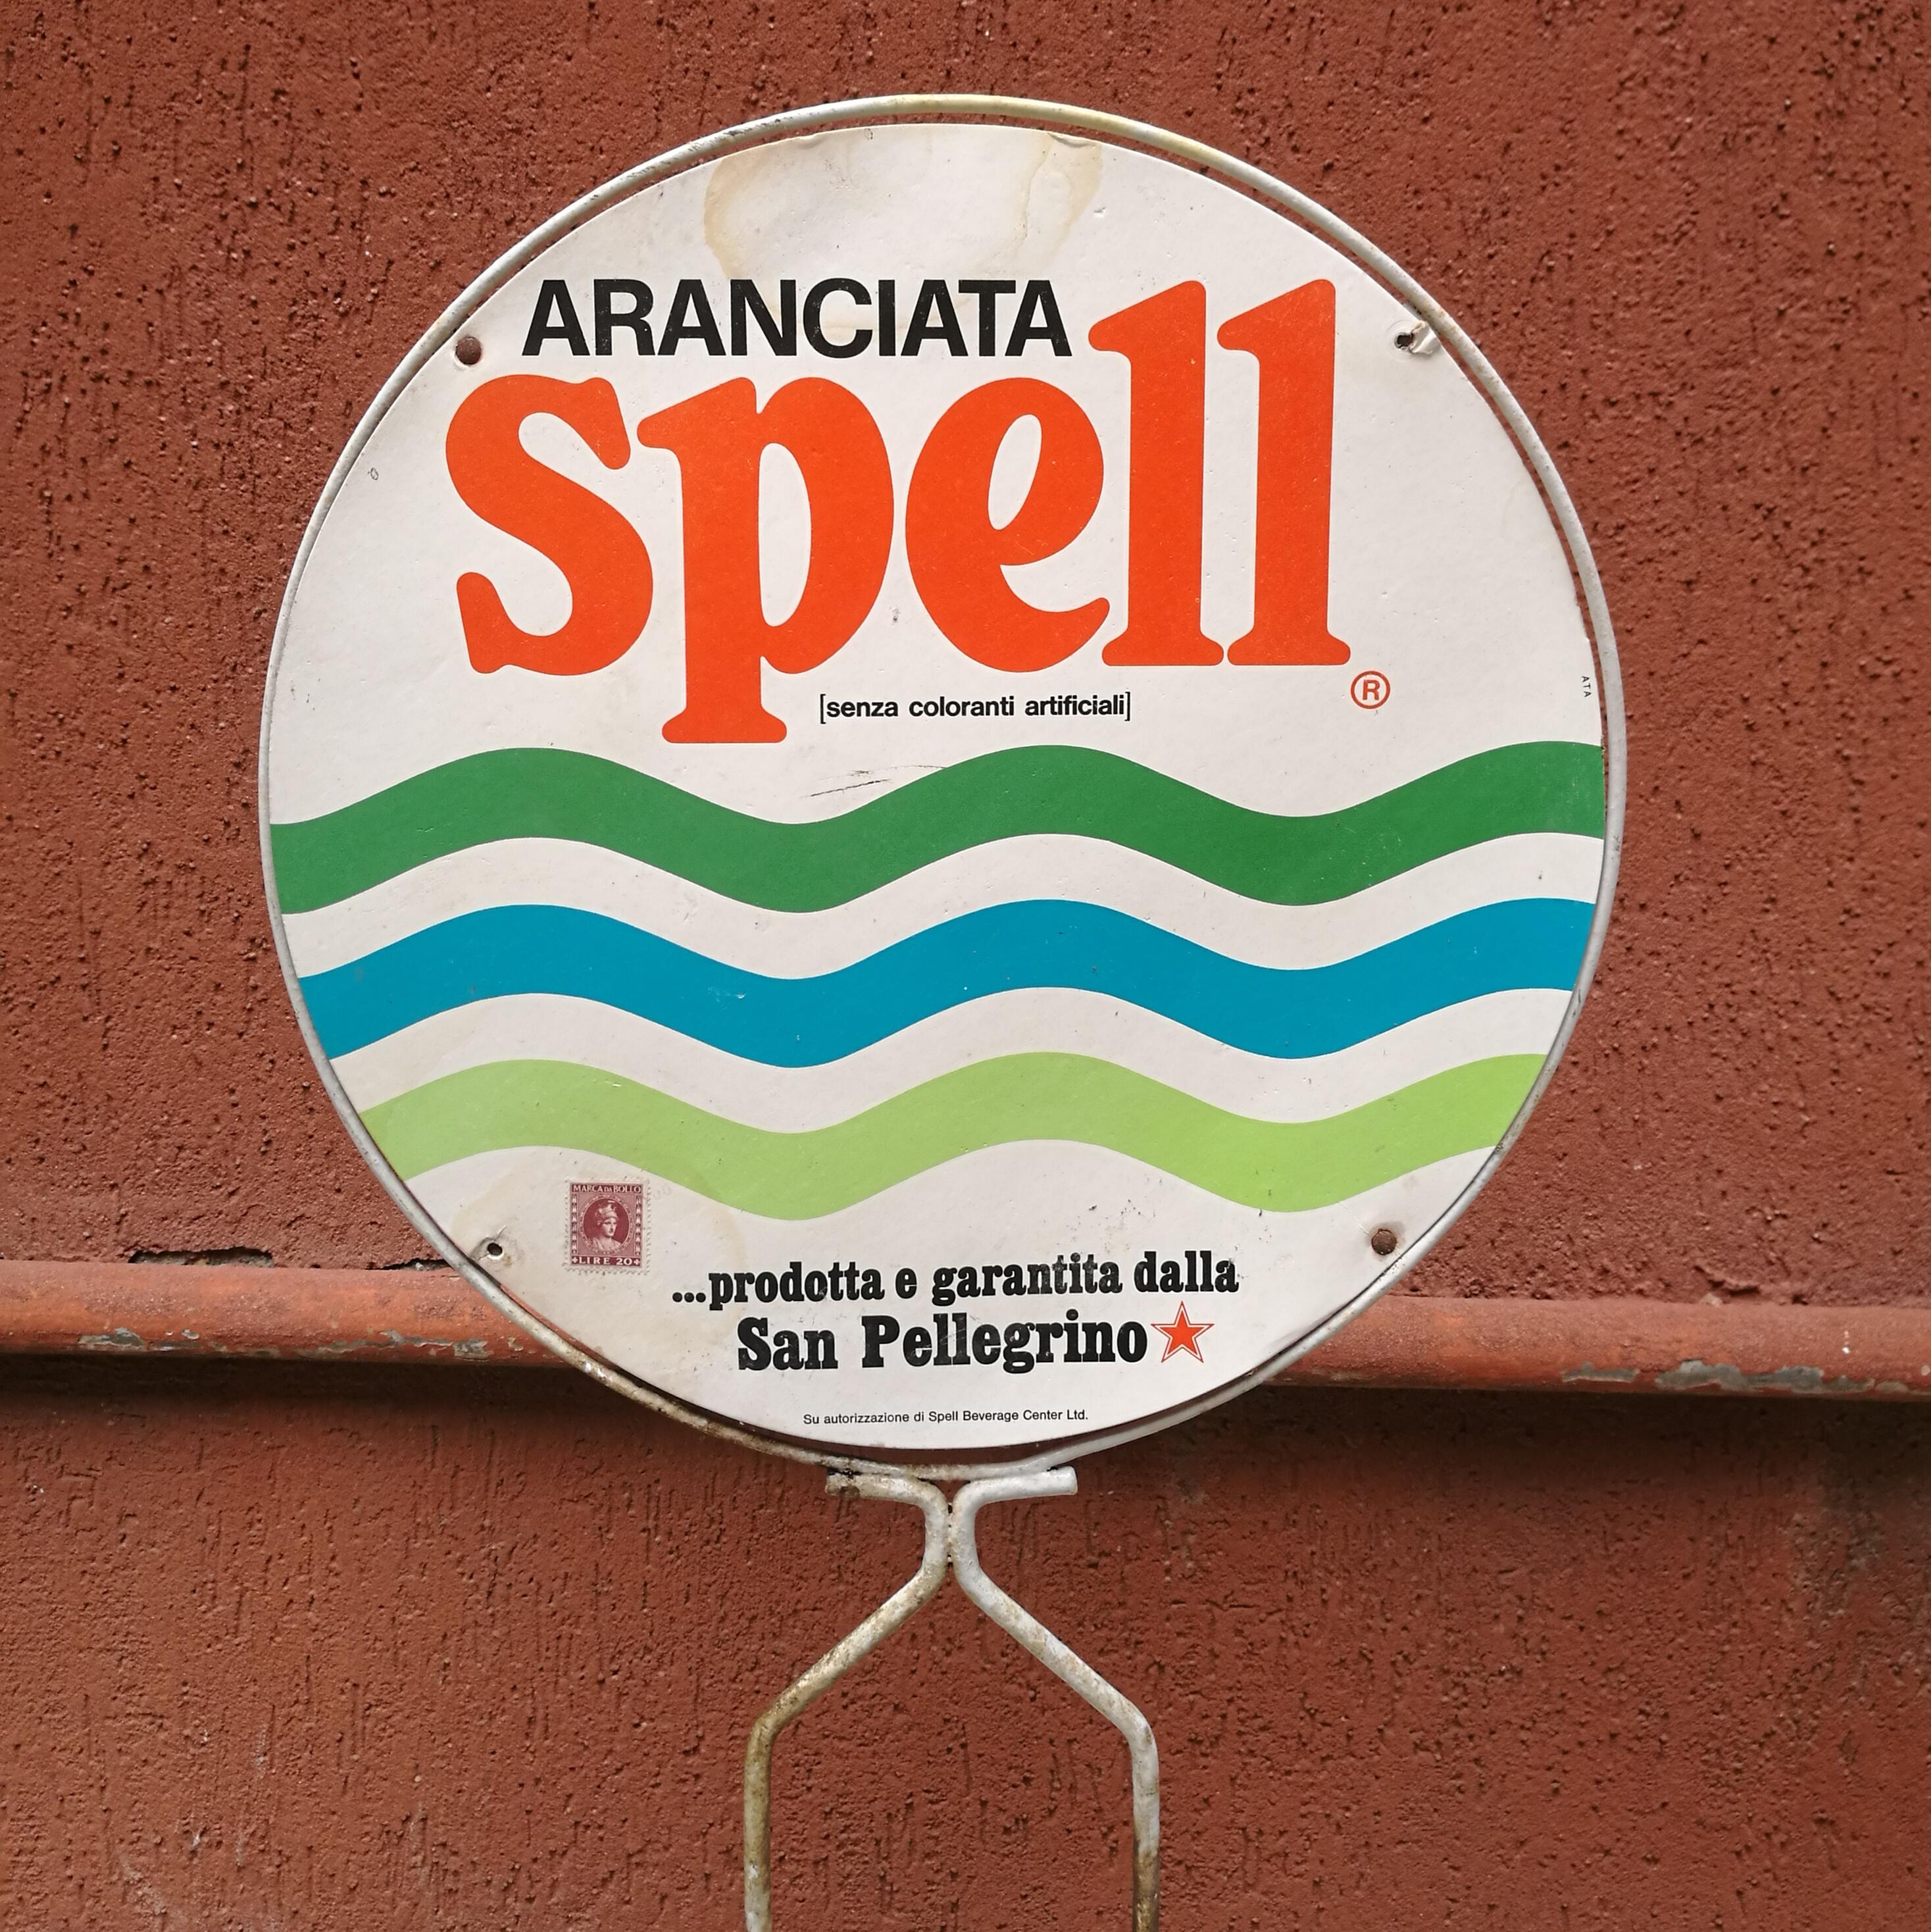 Italian advertising metal bottle holder by Spell, 1960s. Spell orange juice bottle holder with metal structure and cardboard advertising spot.